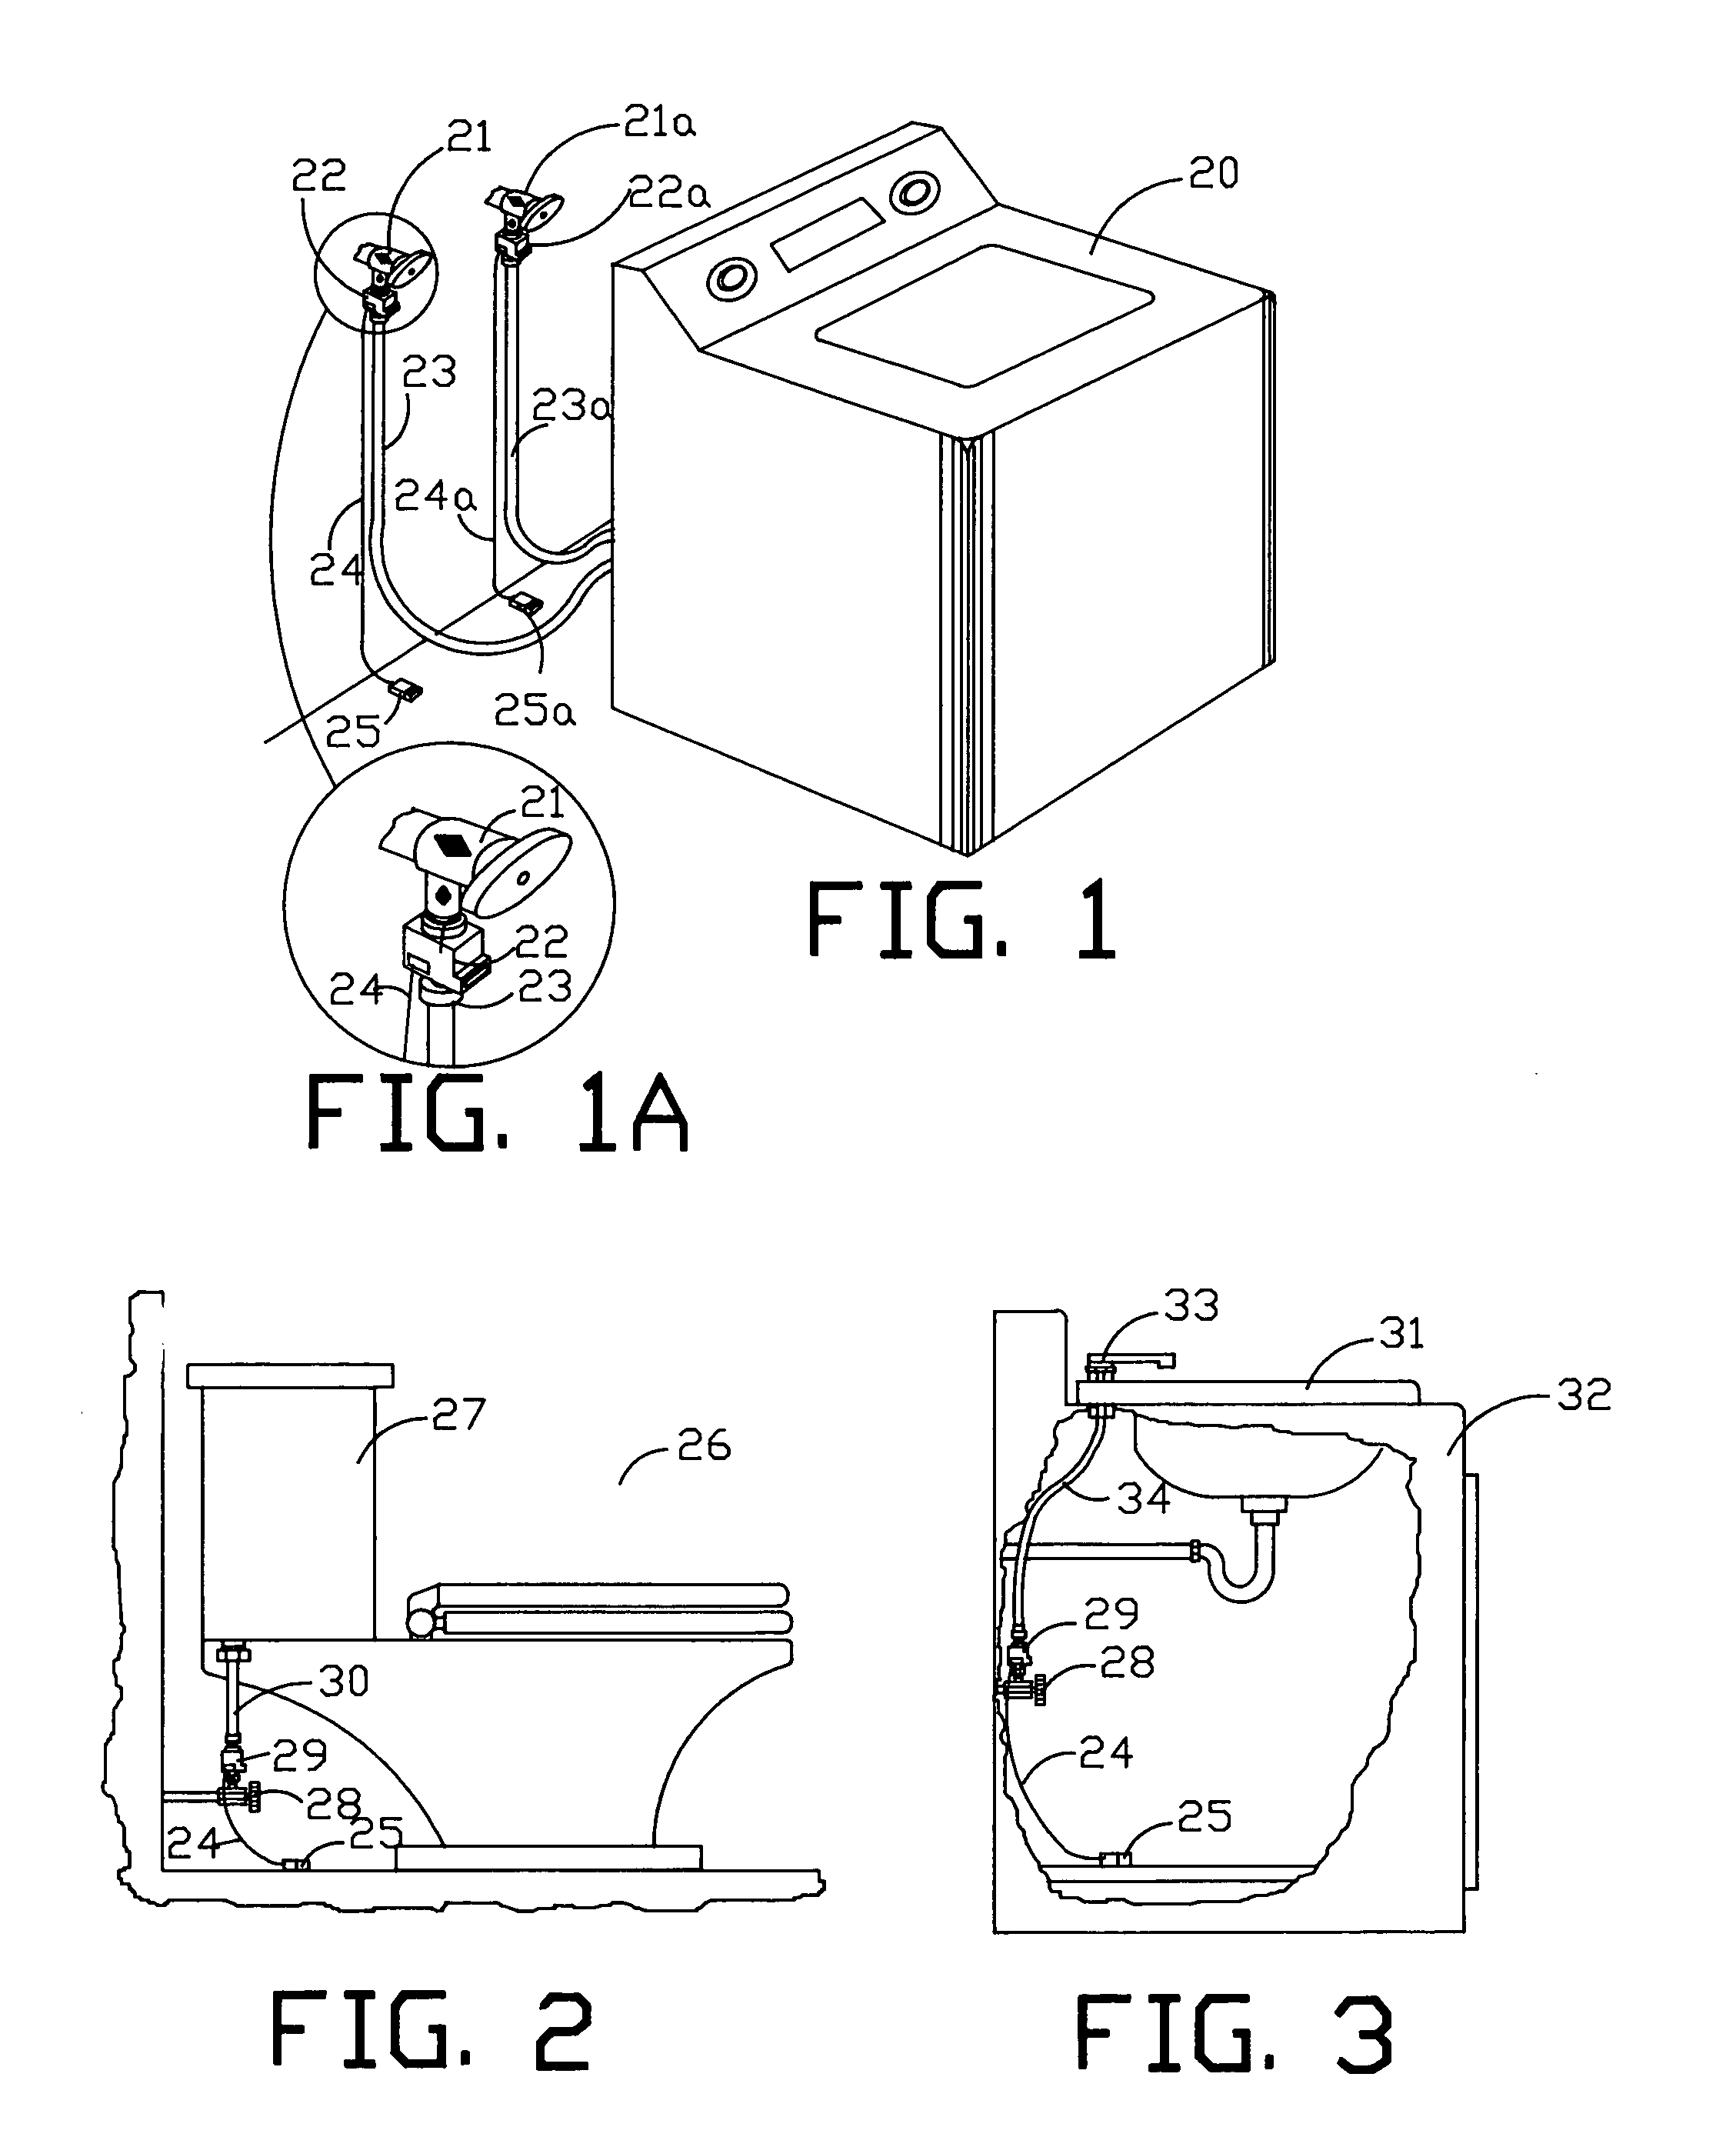 Shutoff valve system with leak detector